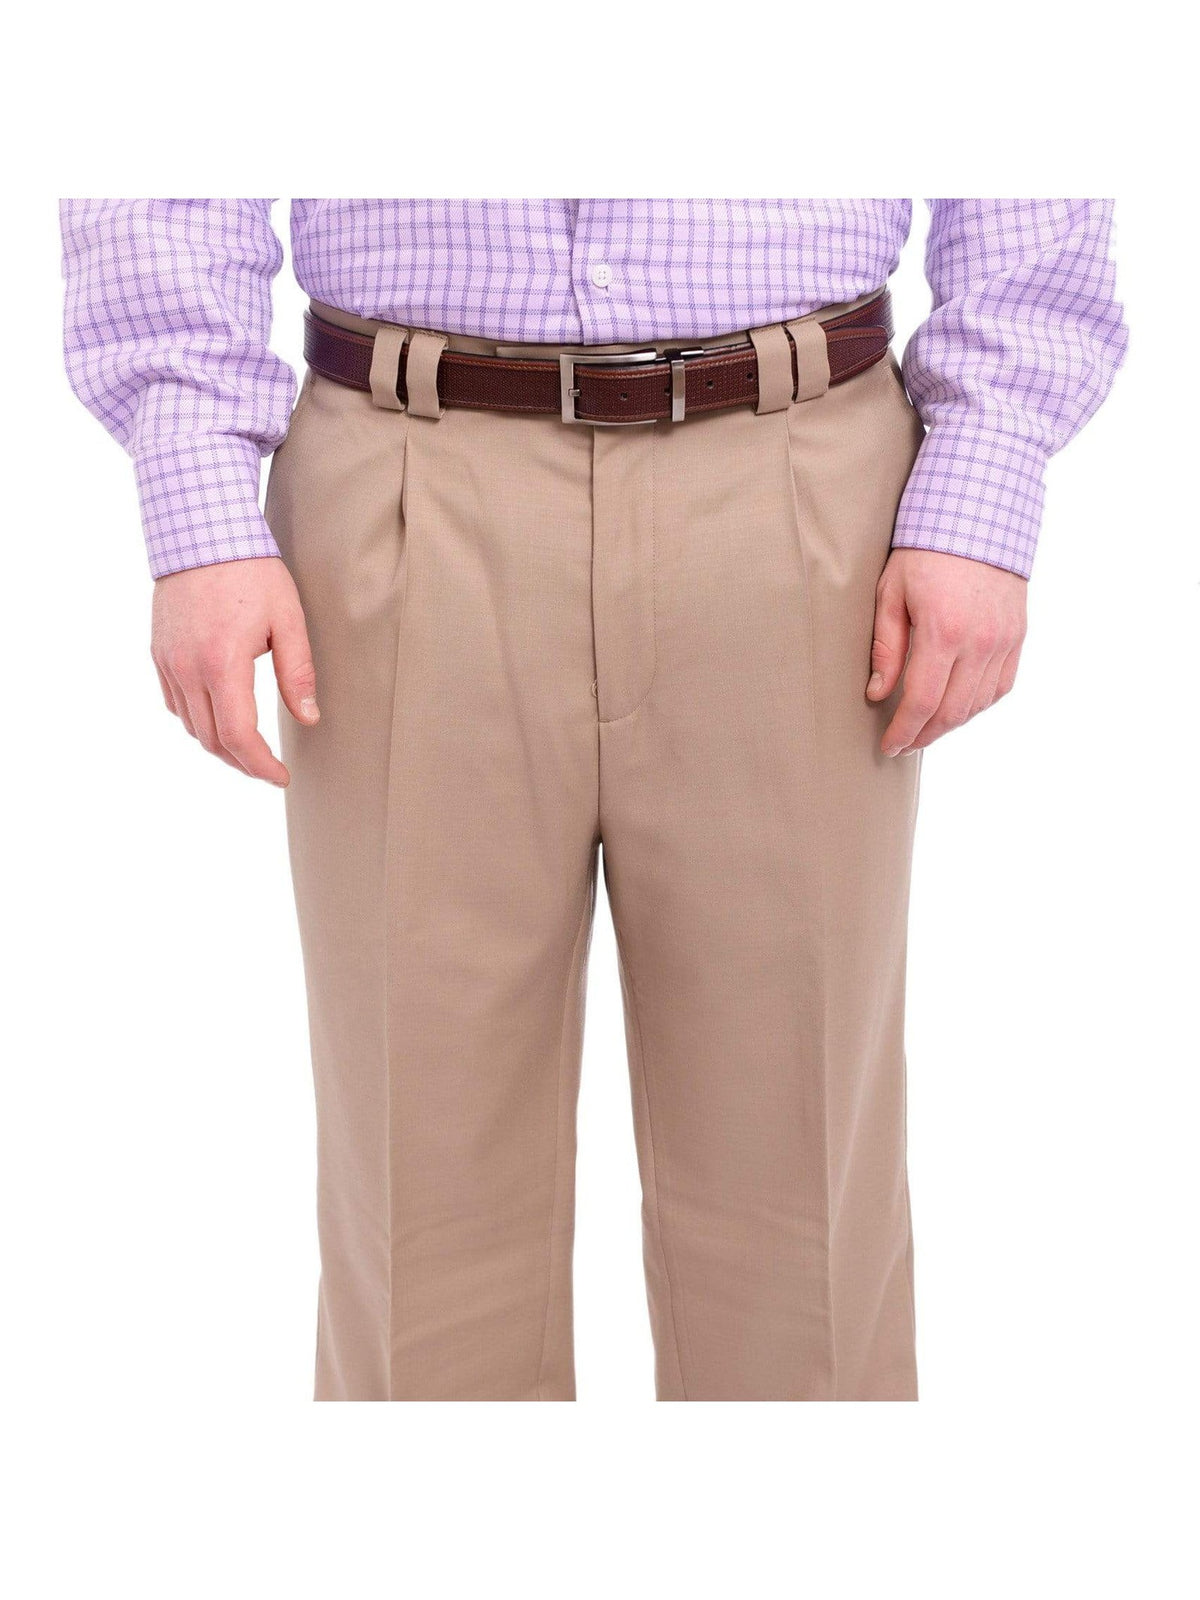 Steven Land Classic Fit Solid Tan Single Pleated Wide Leg Wool Dress Pants - The Suit Depot